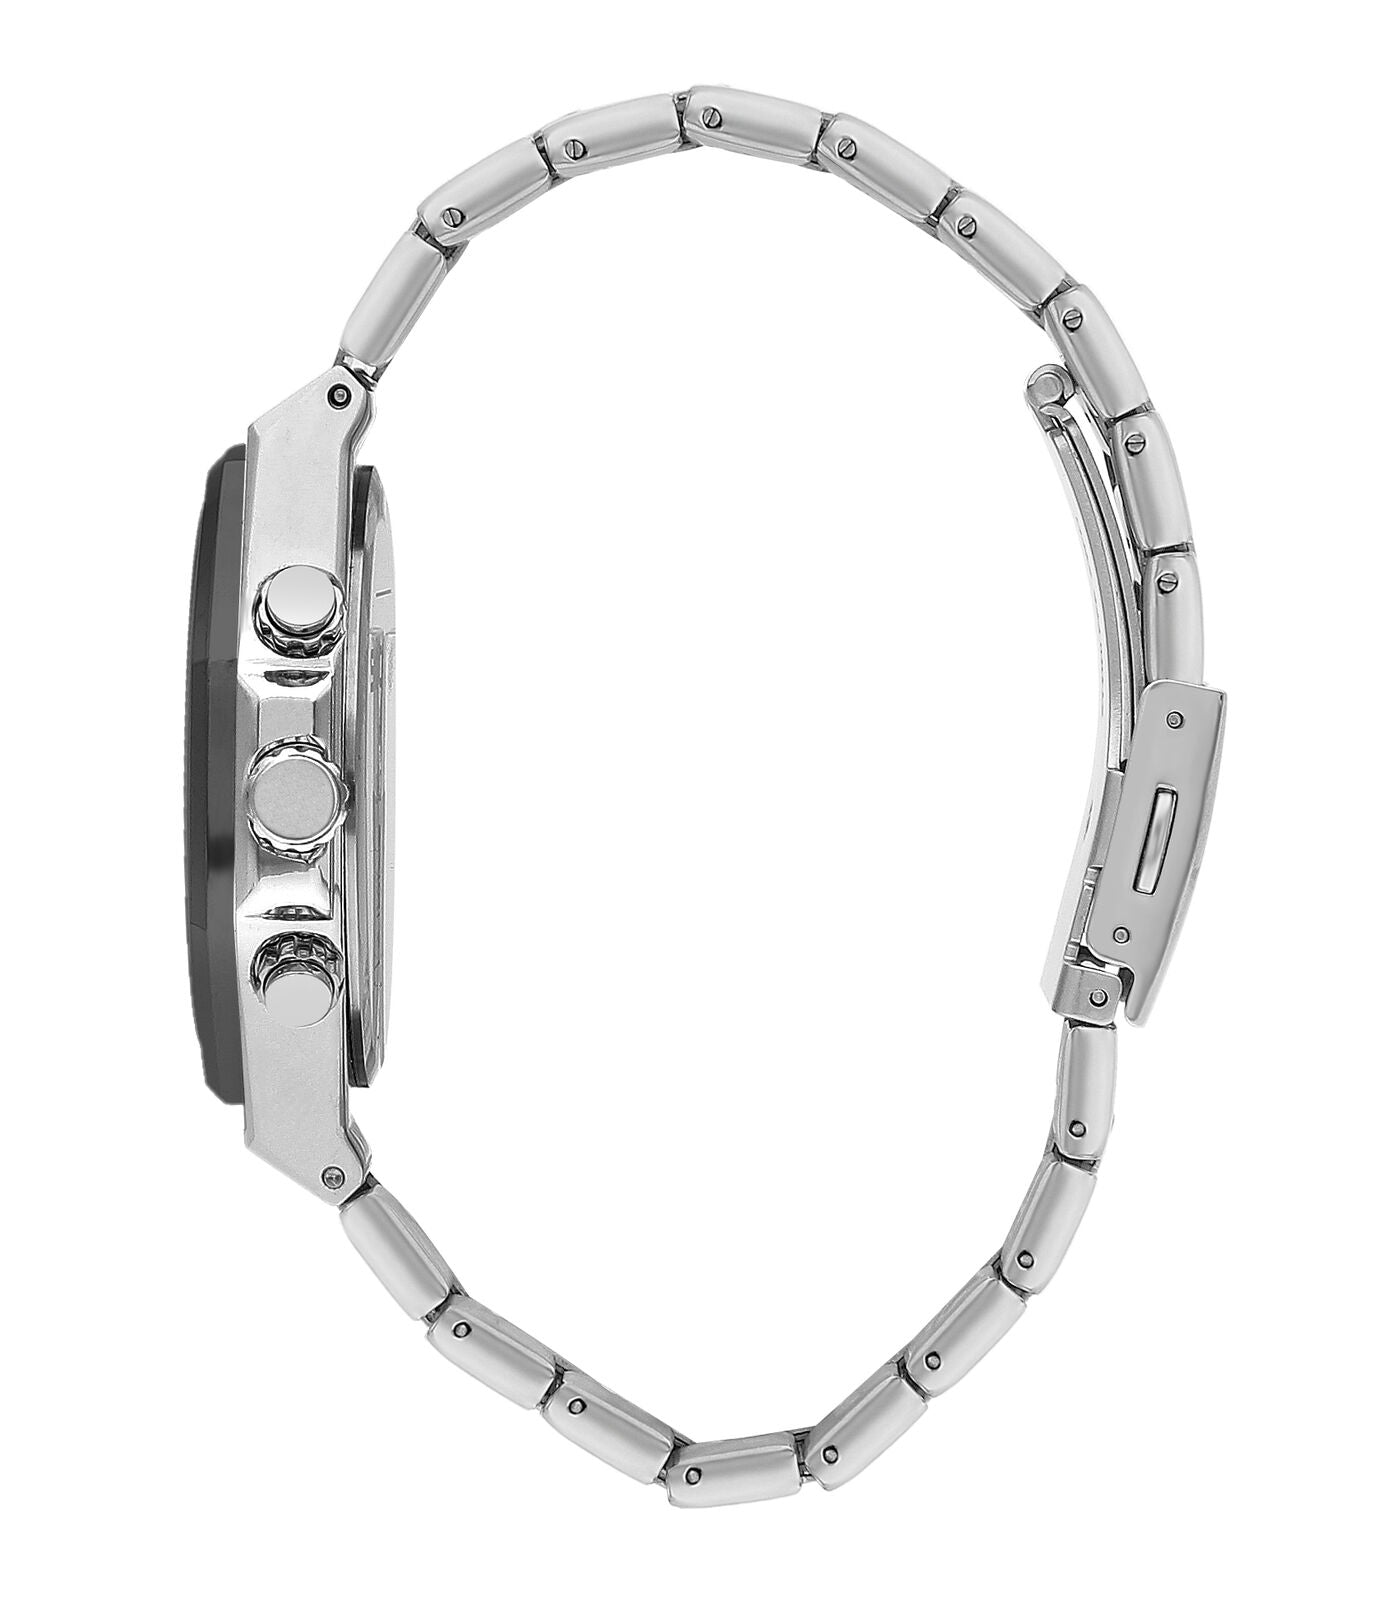 Slazenger Gents Multi Function Solid stainless steel  Watch - SL.9.2106.2.08